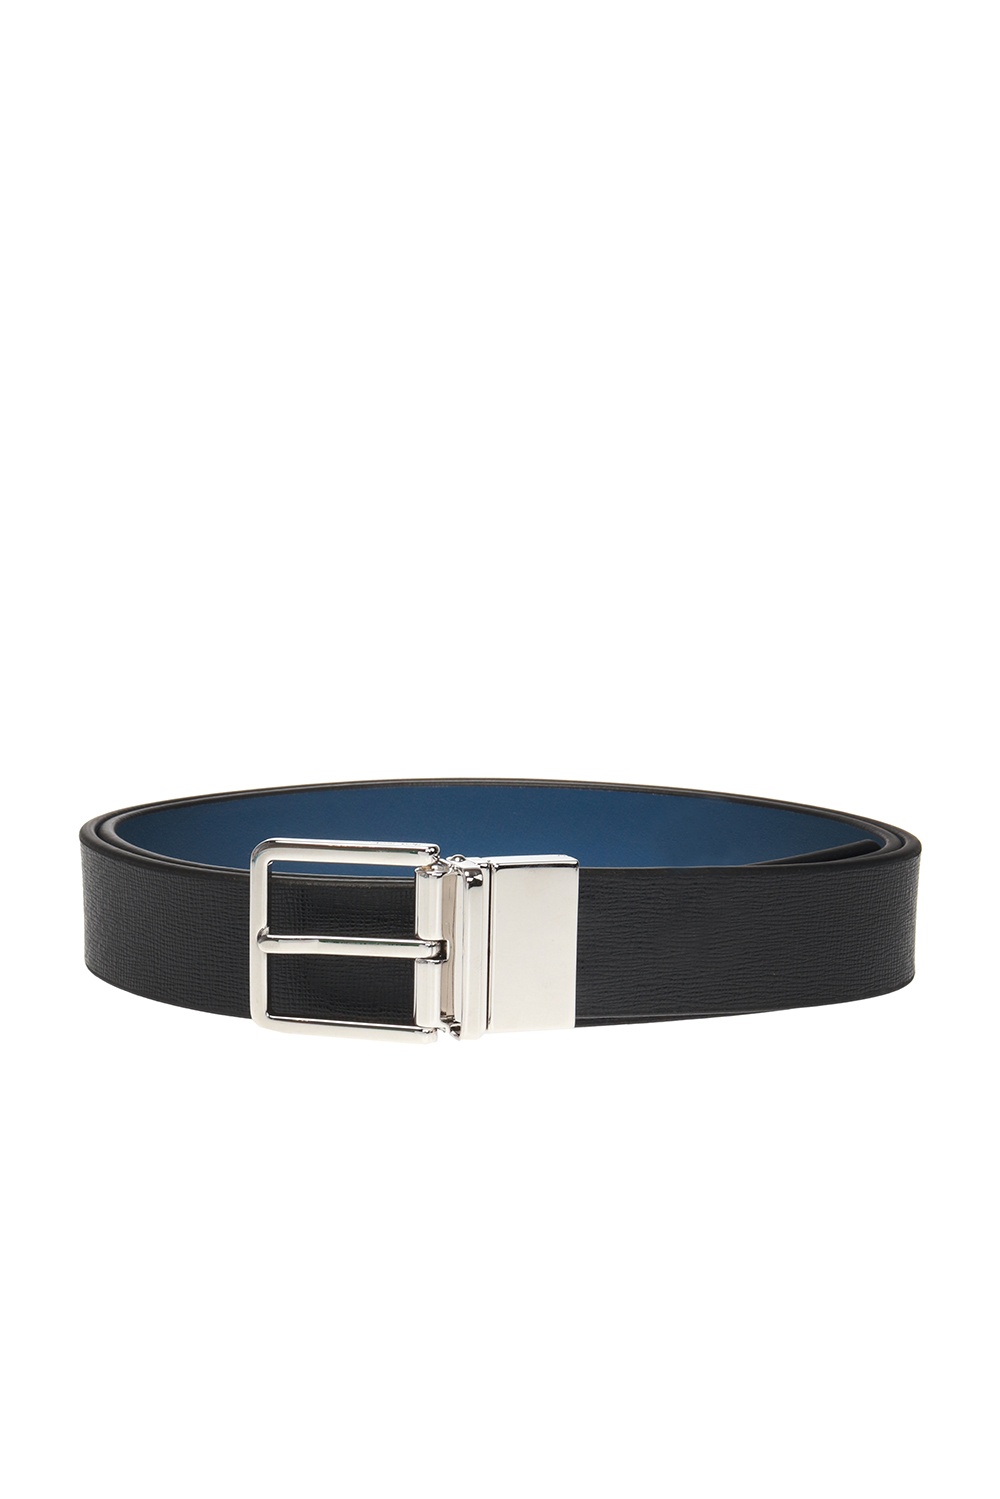 Paul Smith Branded leather belt | Men's Accessories | Vitkac